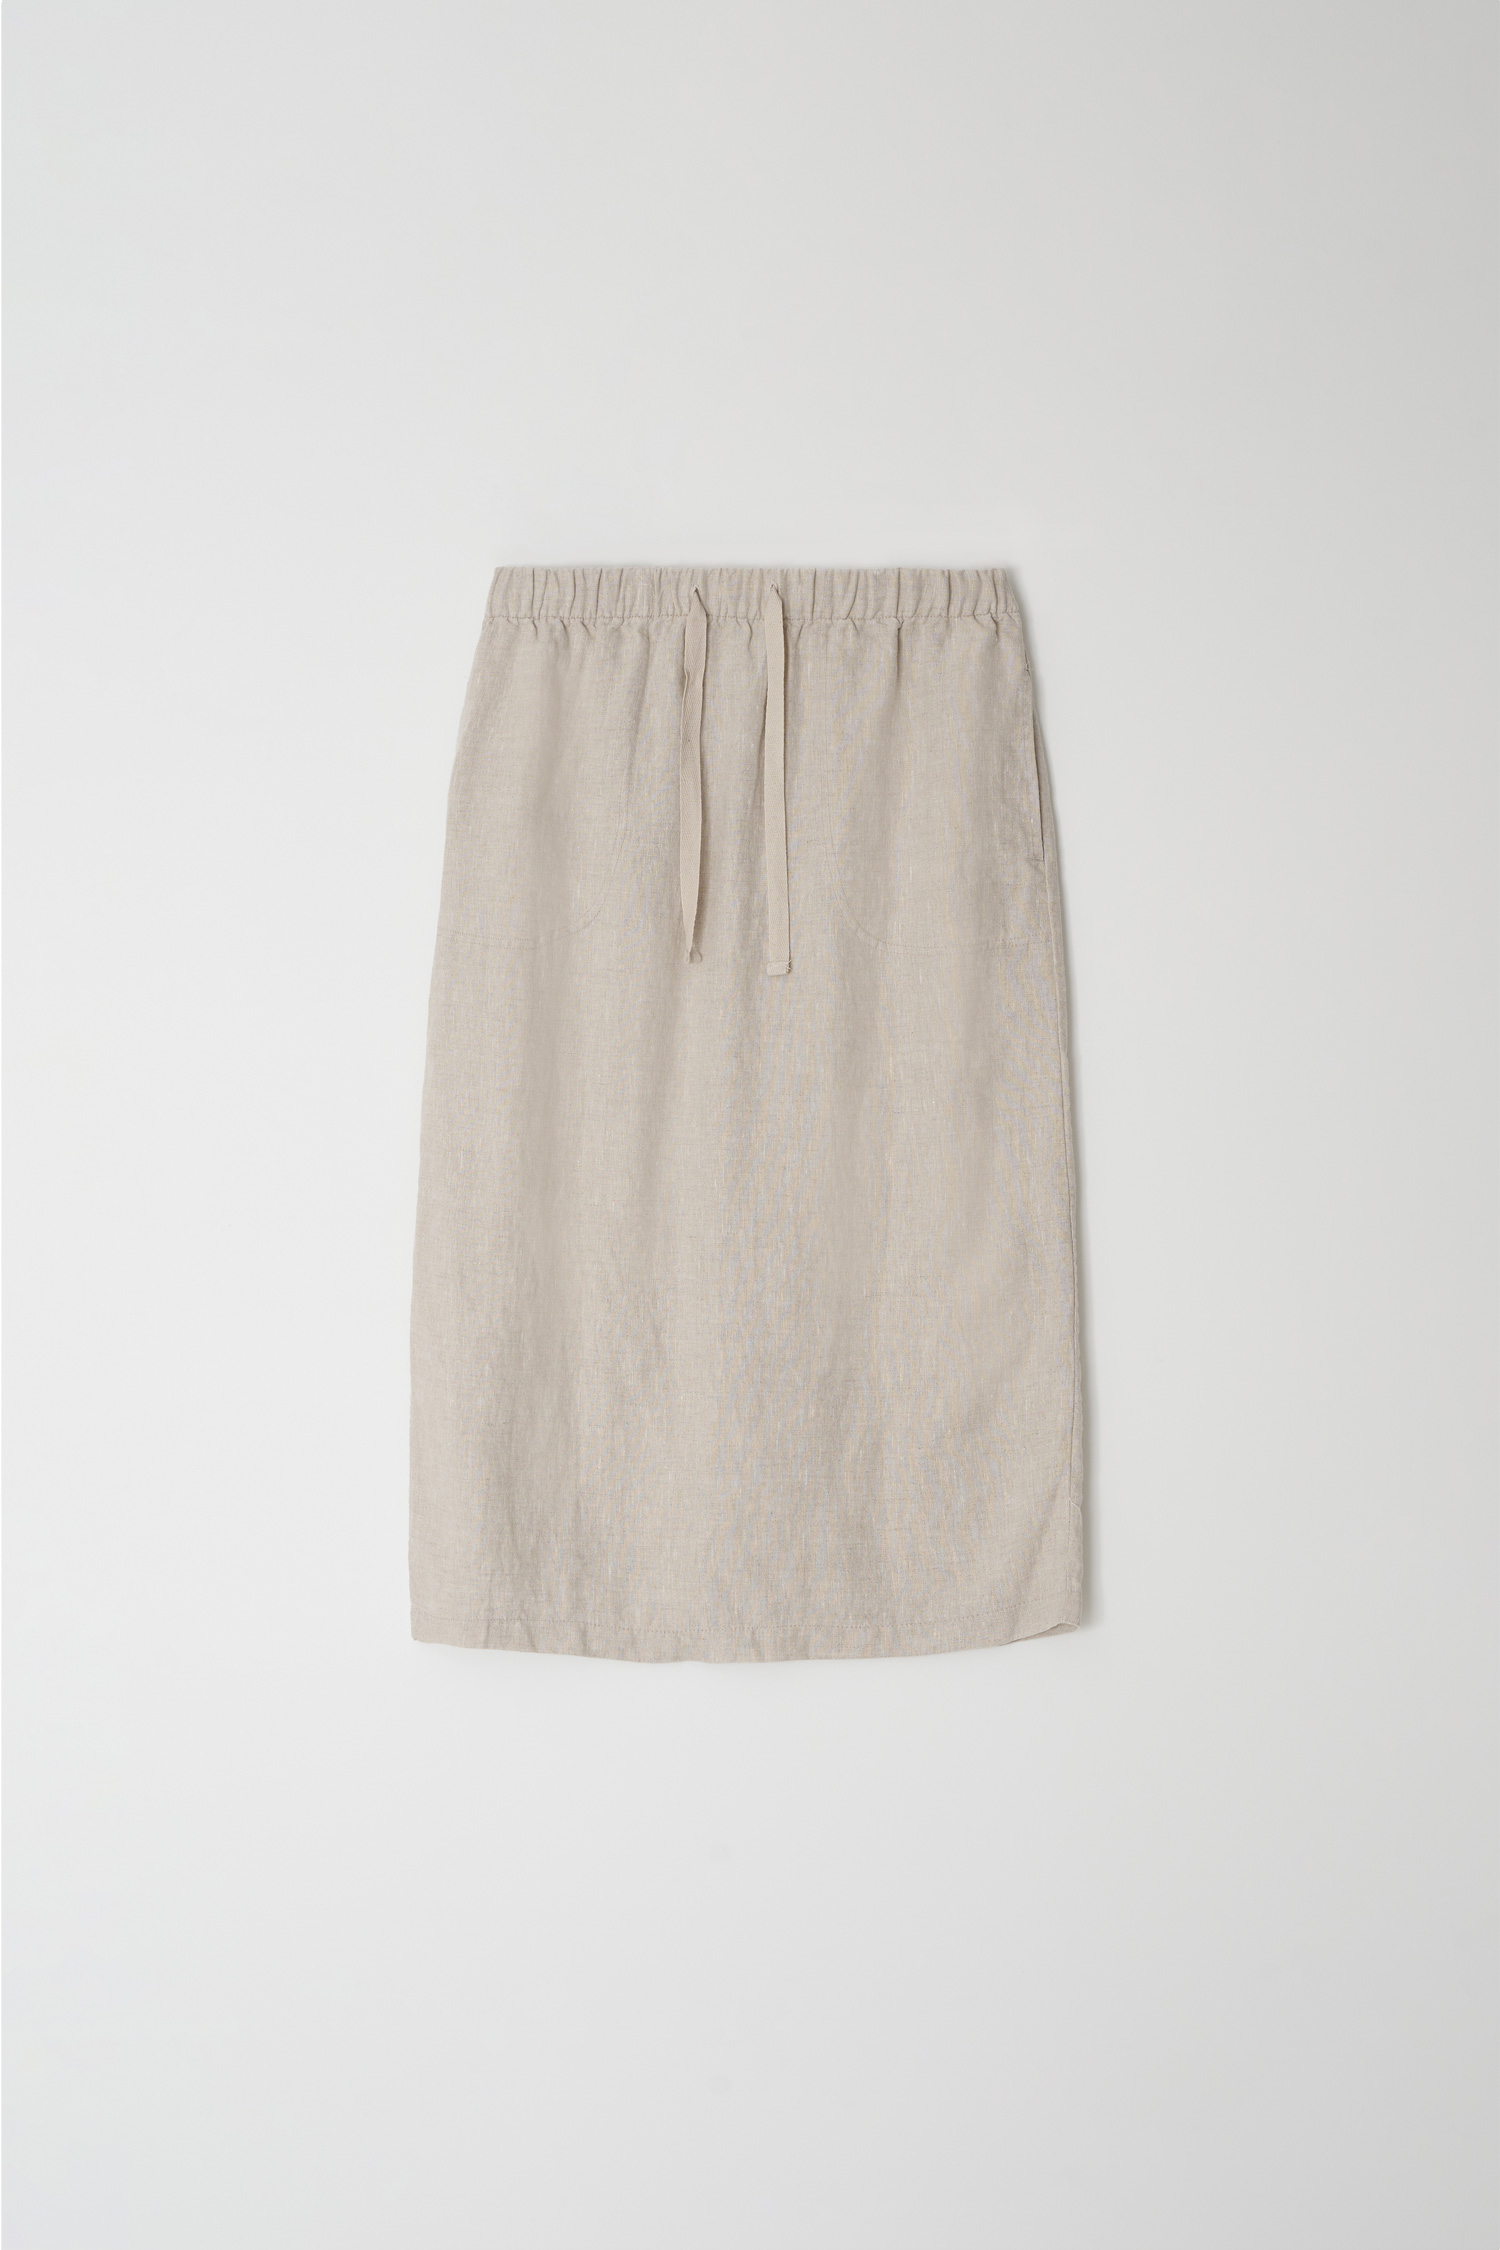 linen band skirt